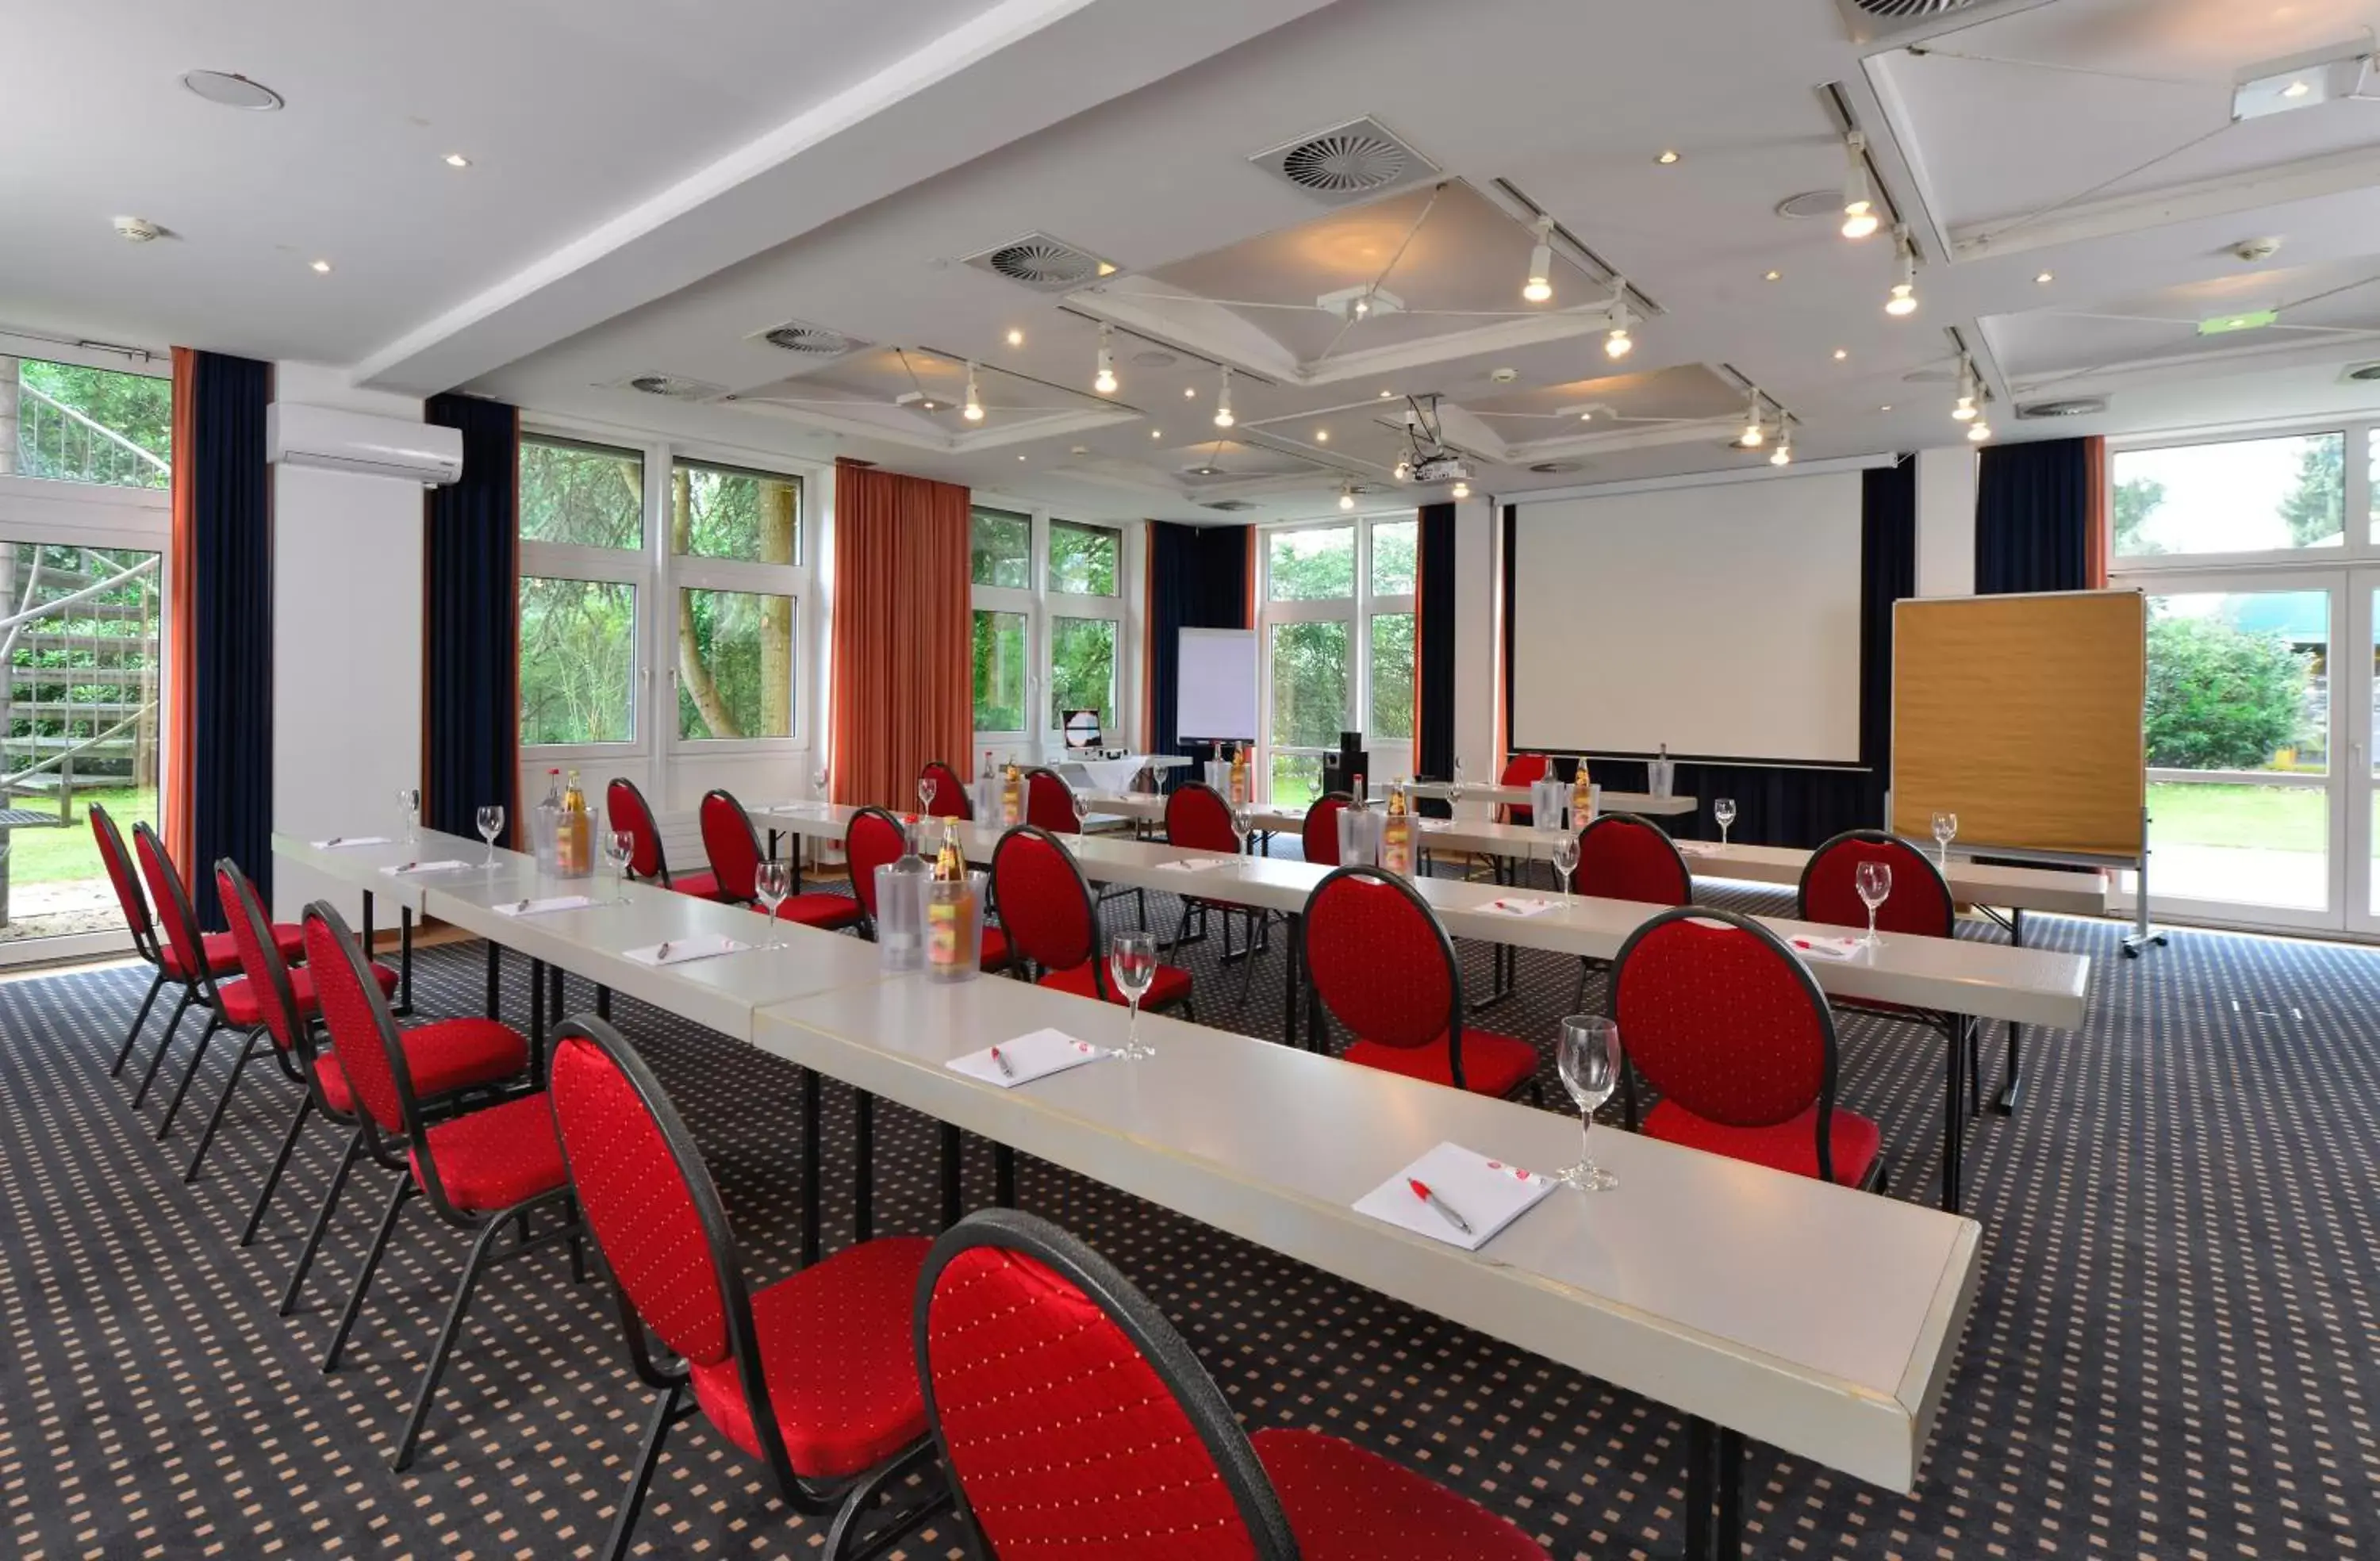 Meeting/conference room in ACHAT Hotel Lüneburger Heide